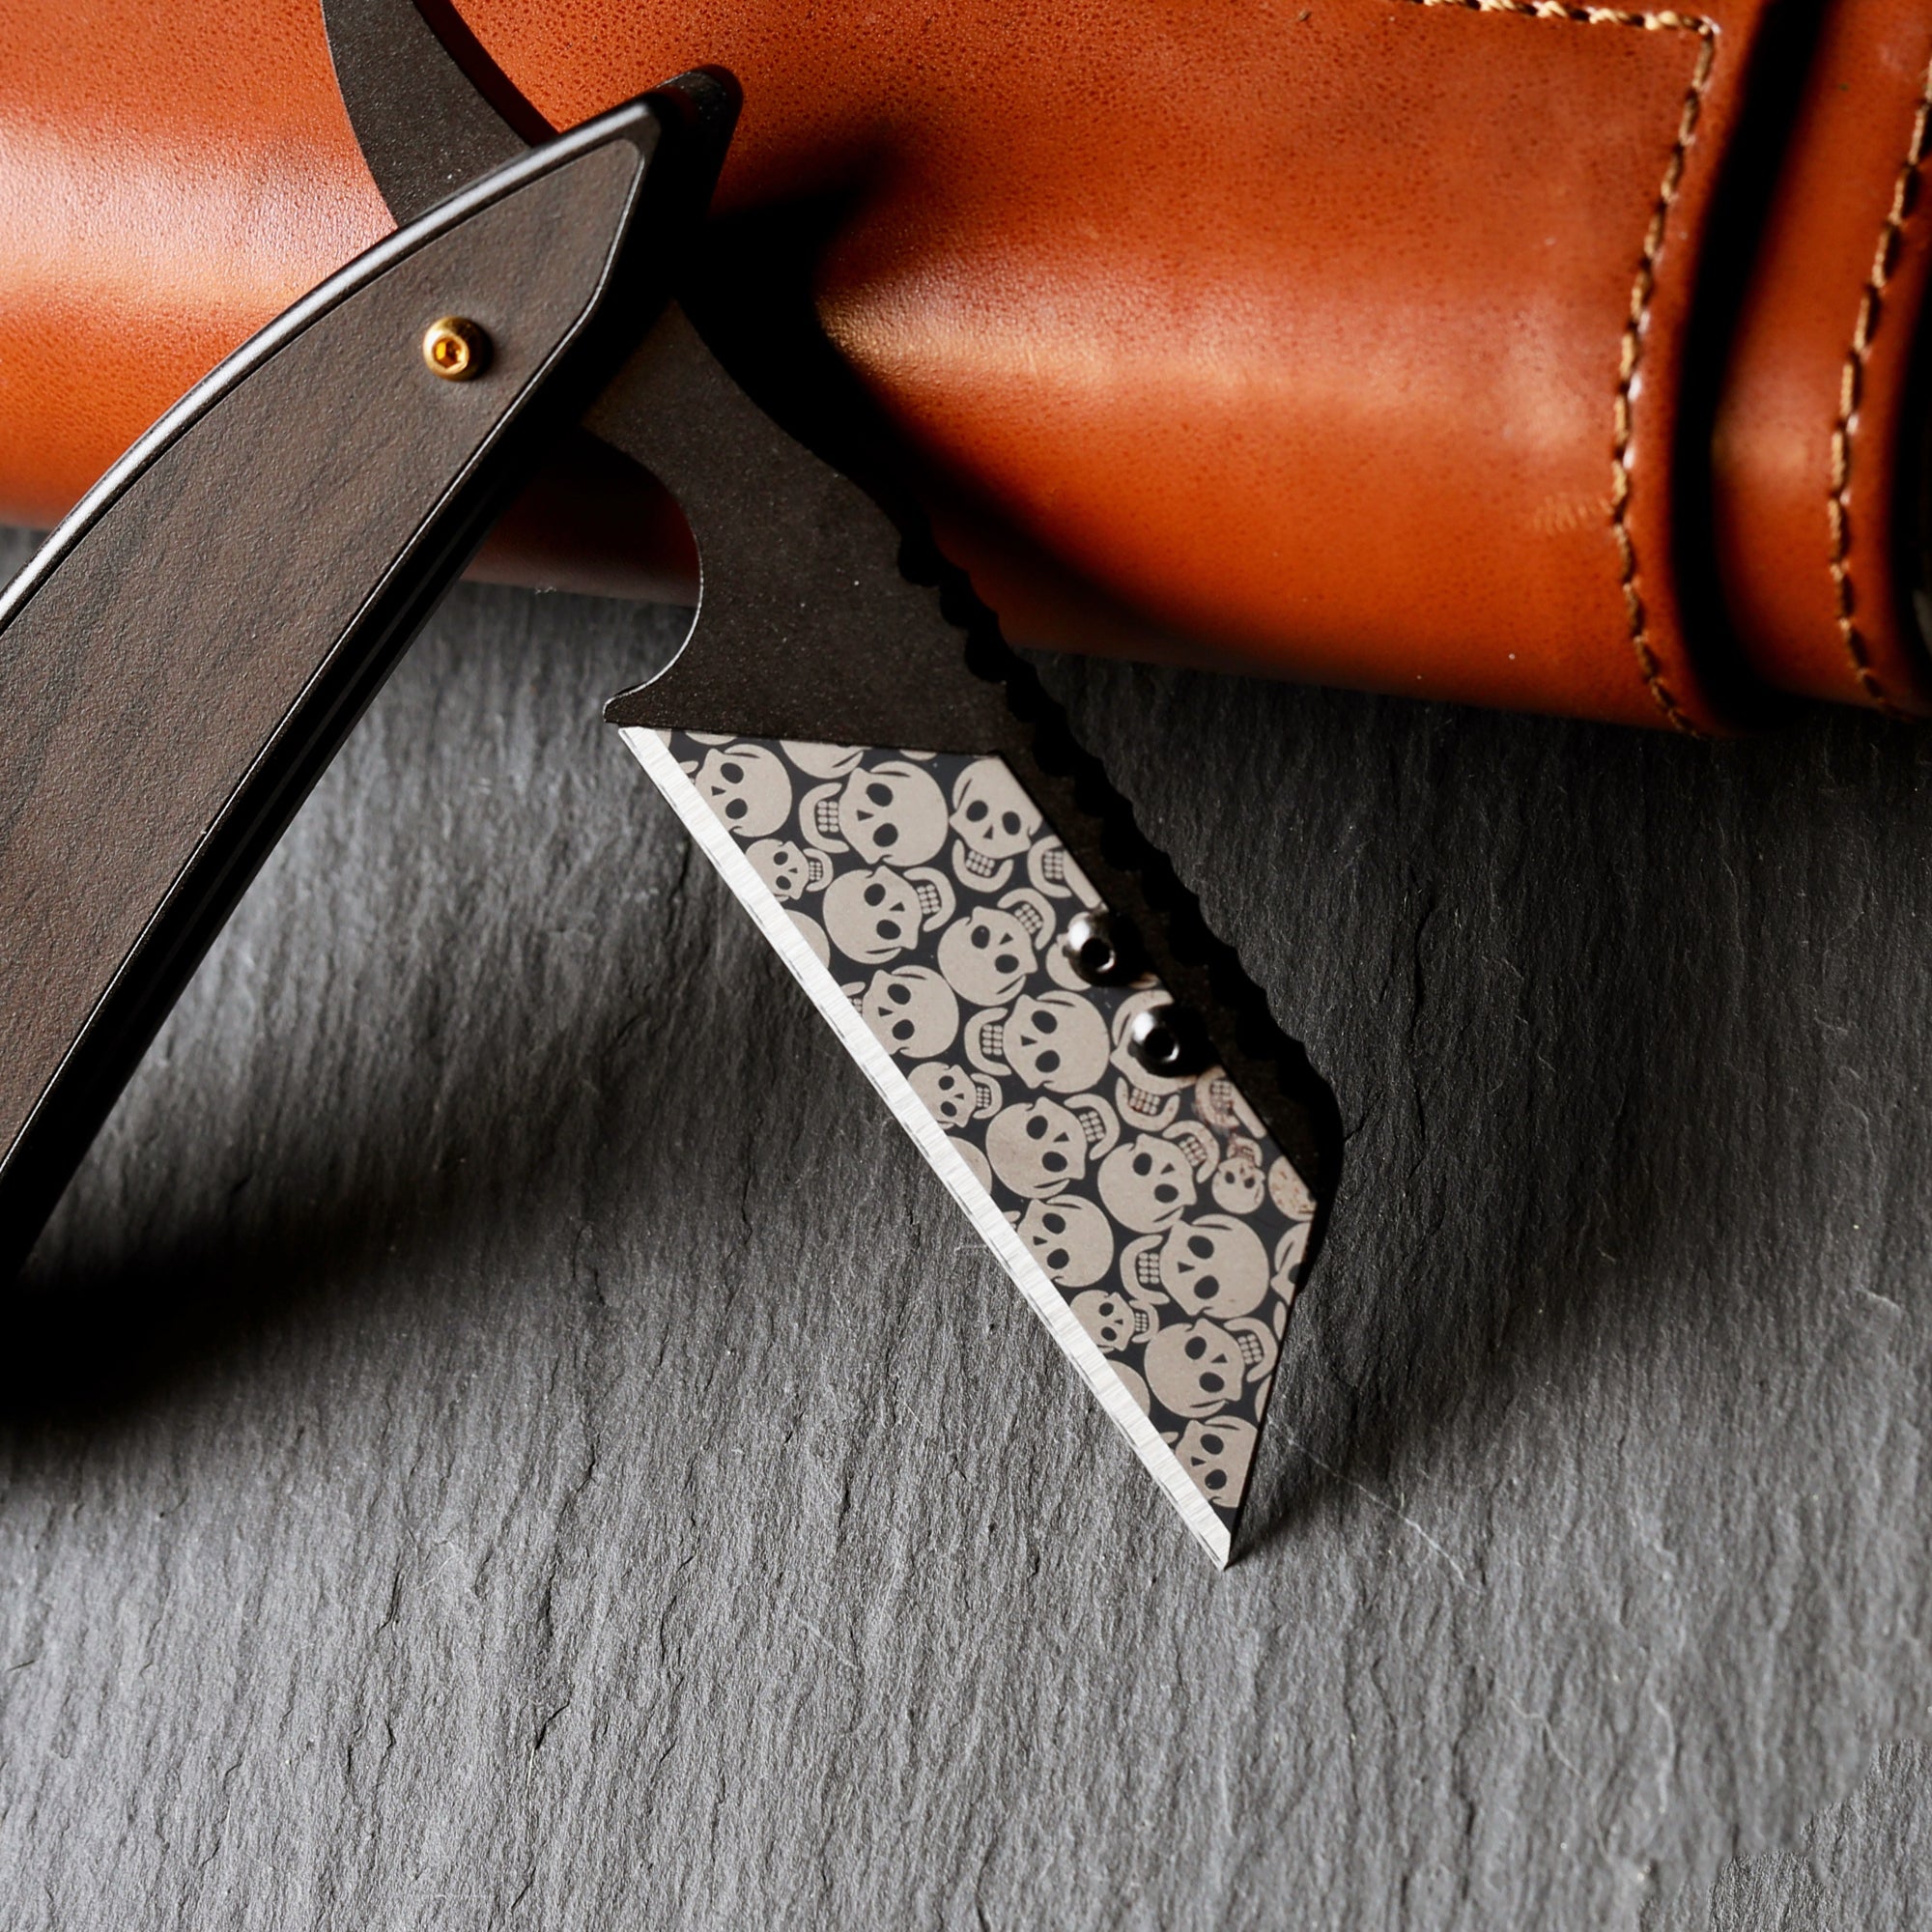 Stinger Engraved Utility Razor Blades, Utility Knife Blades Replacemen